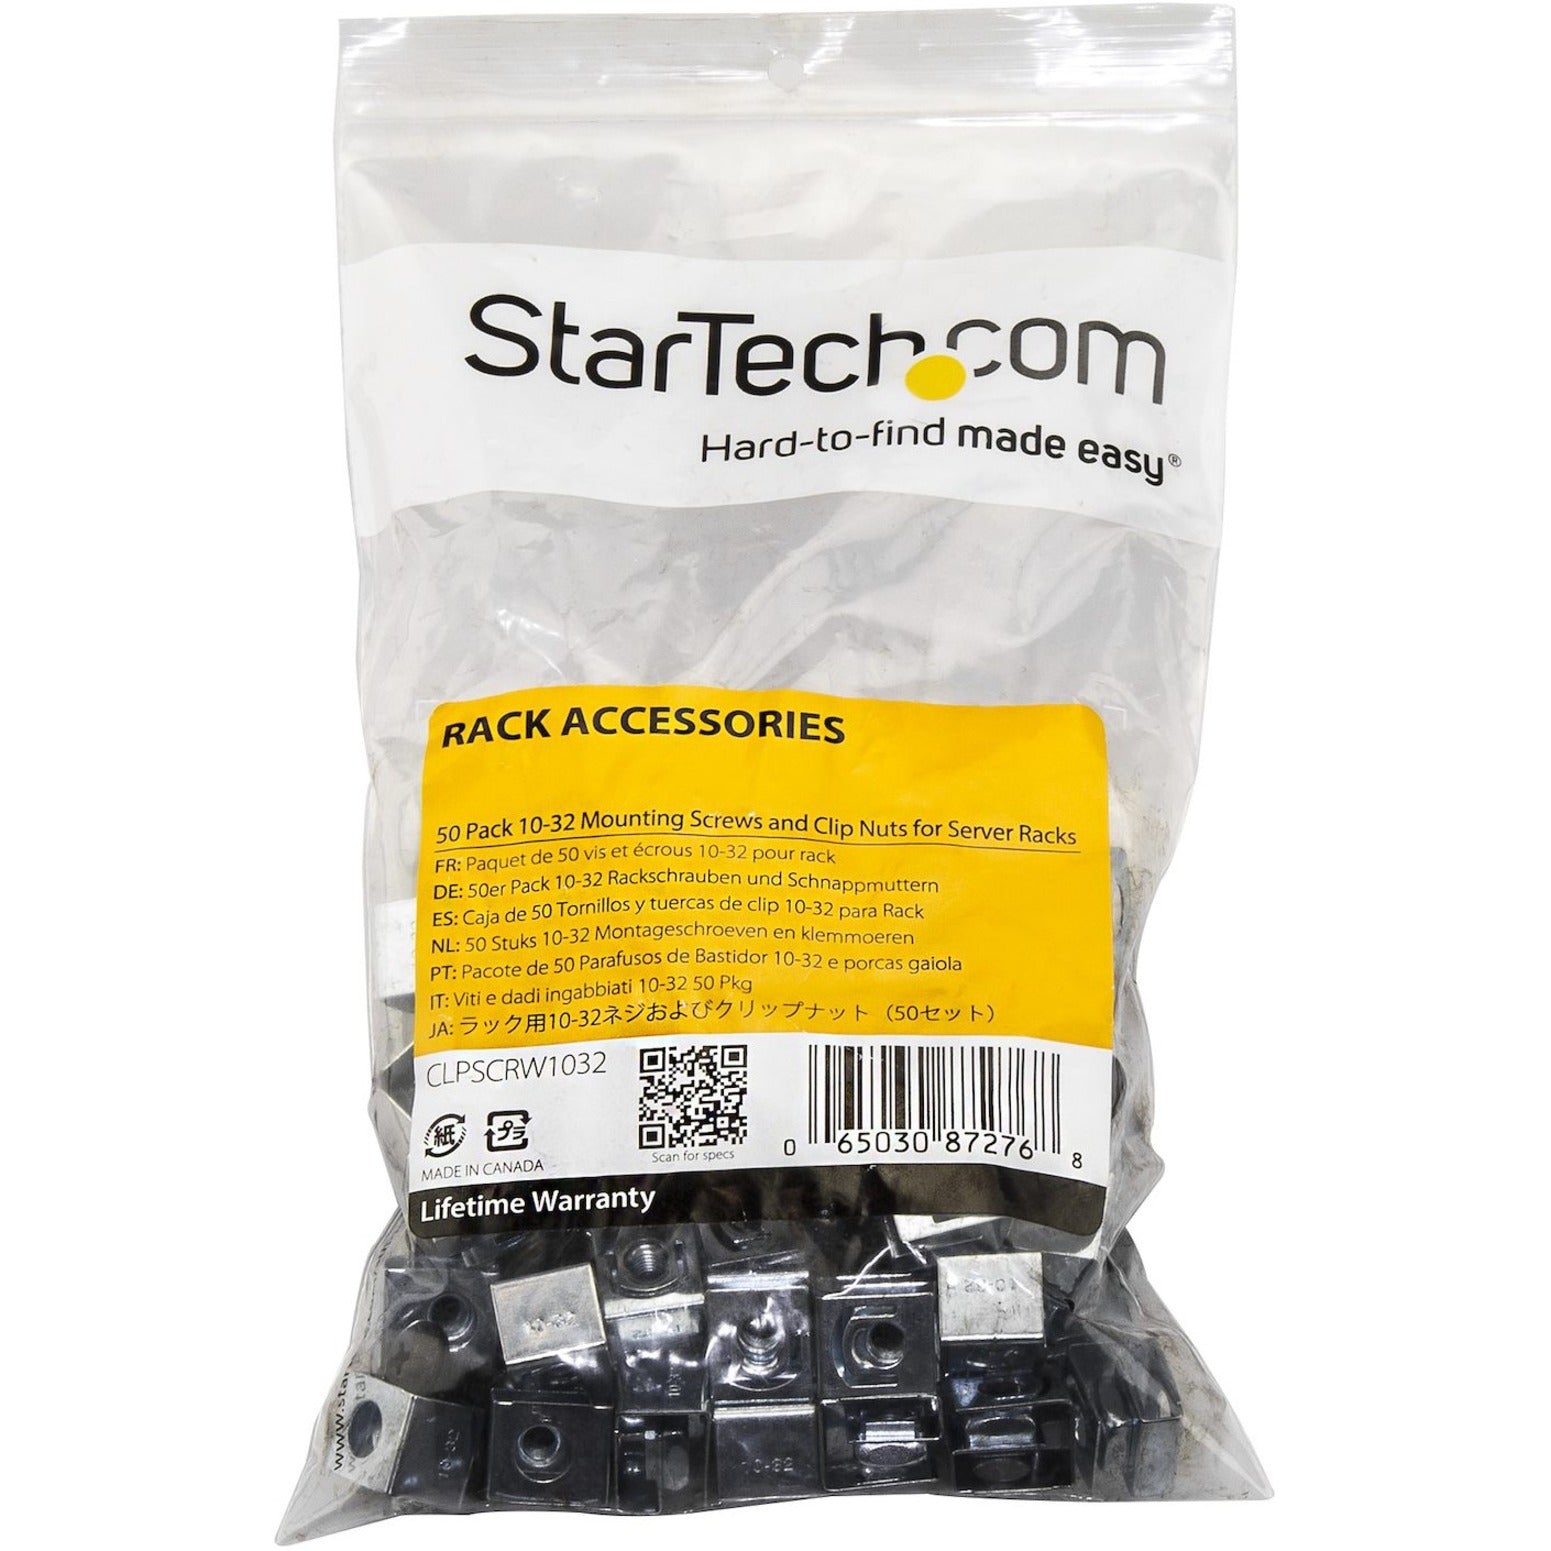 StarTech.com CLPSCRW1032 Server Rack Screws and Clip Nuts - 10-32, Rust Resistant, 50 Pack